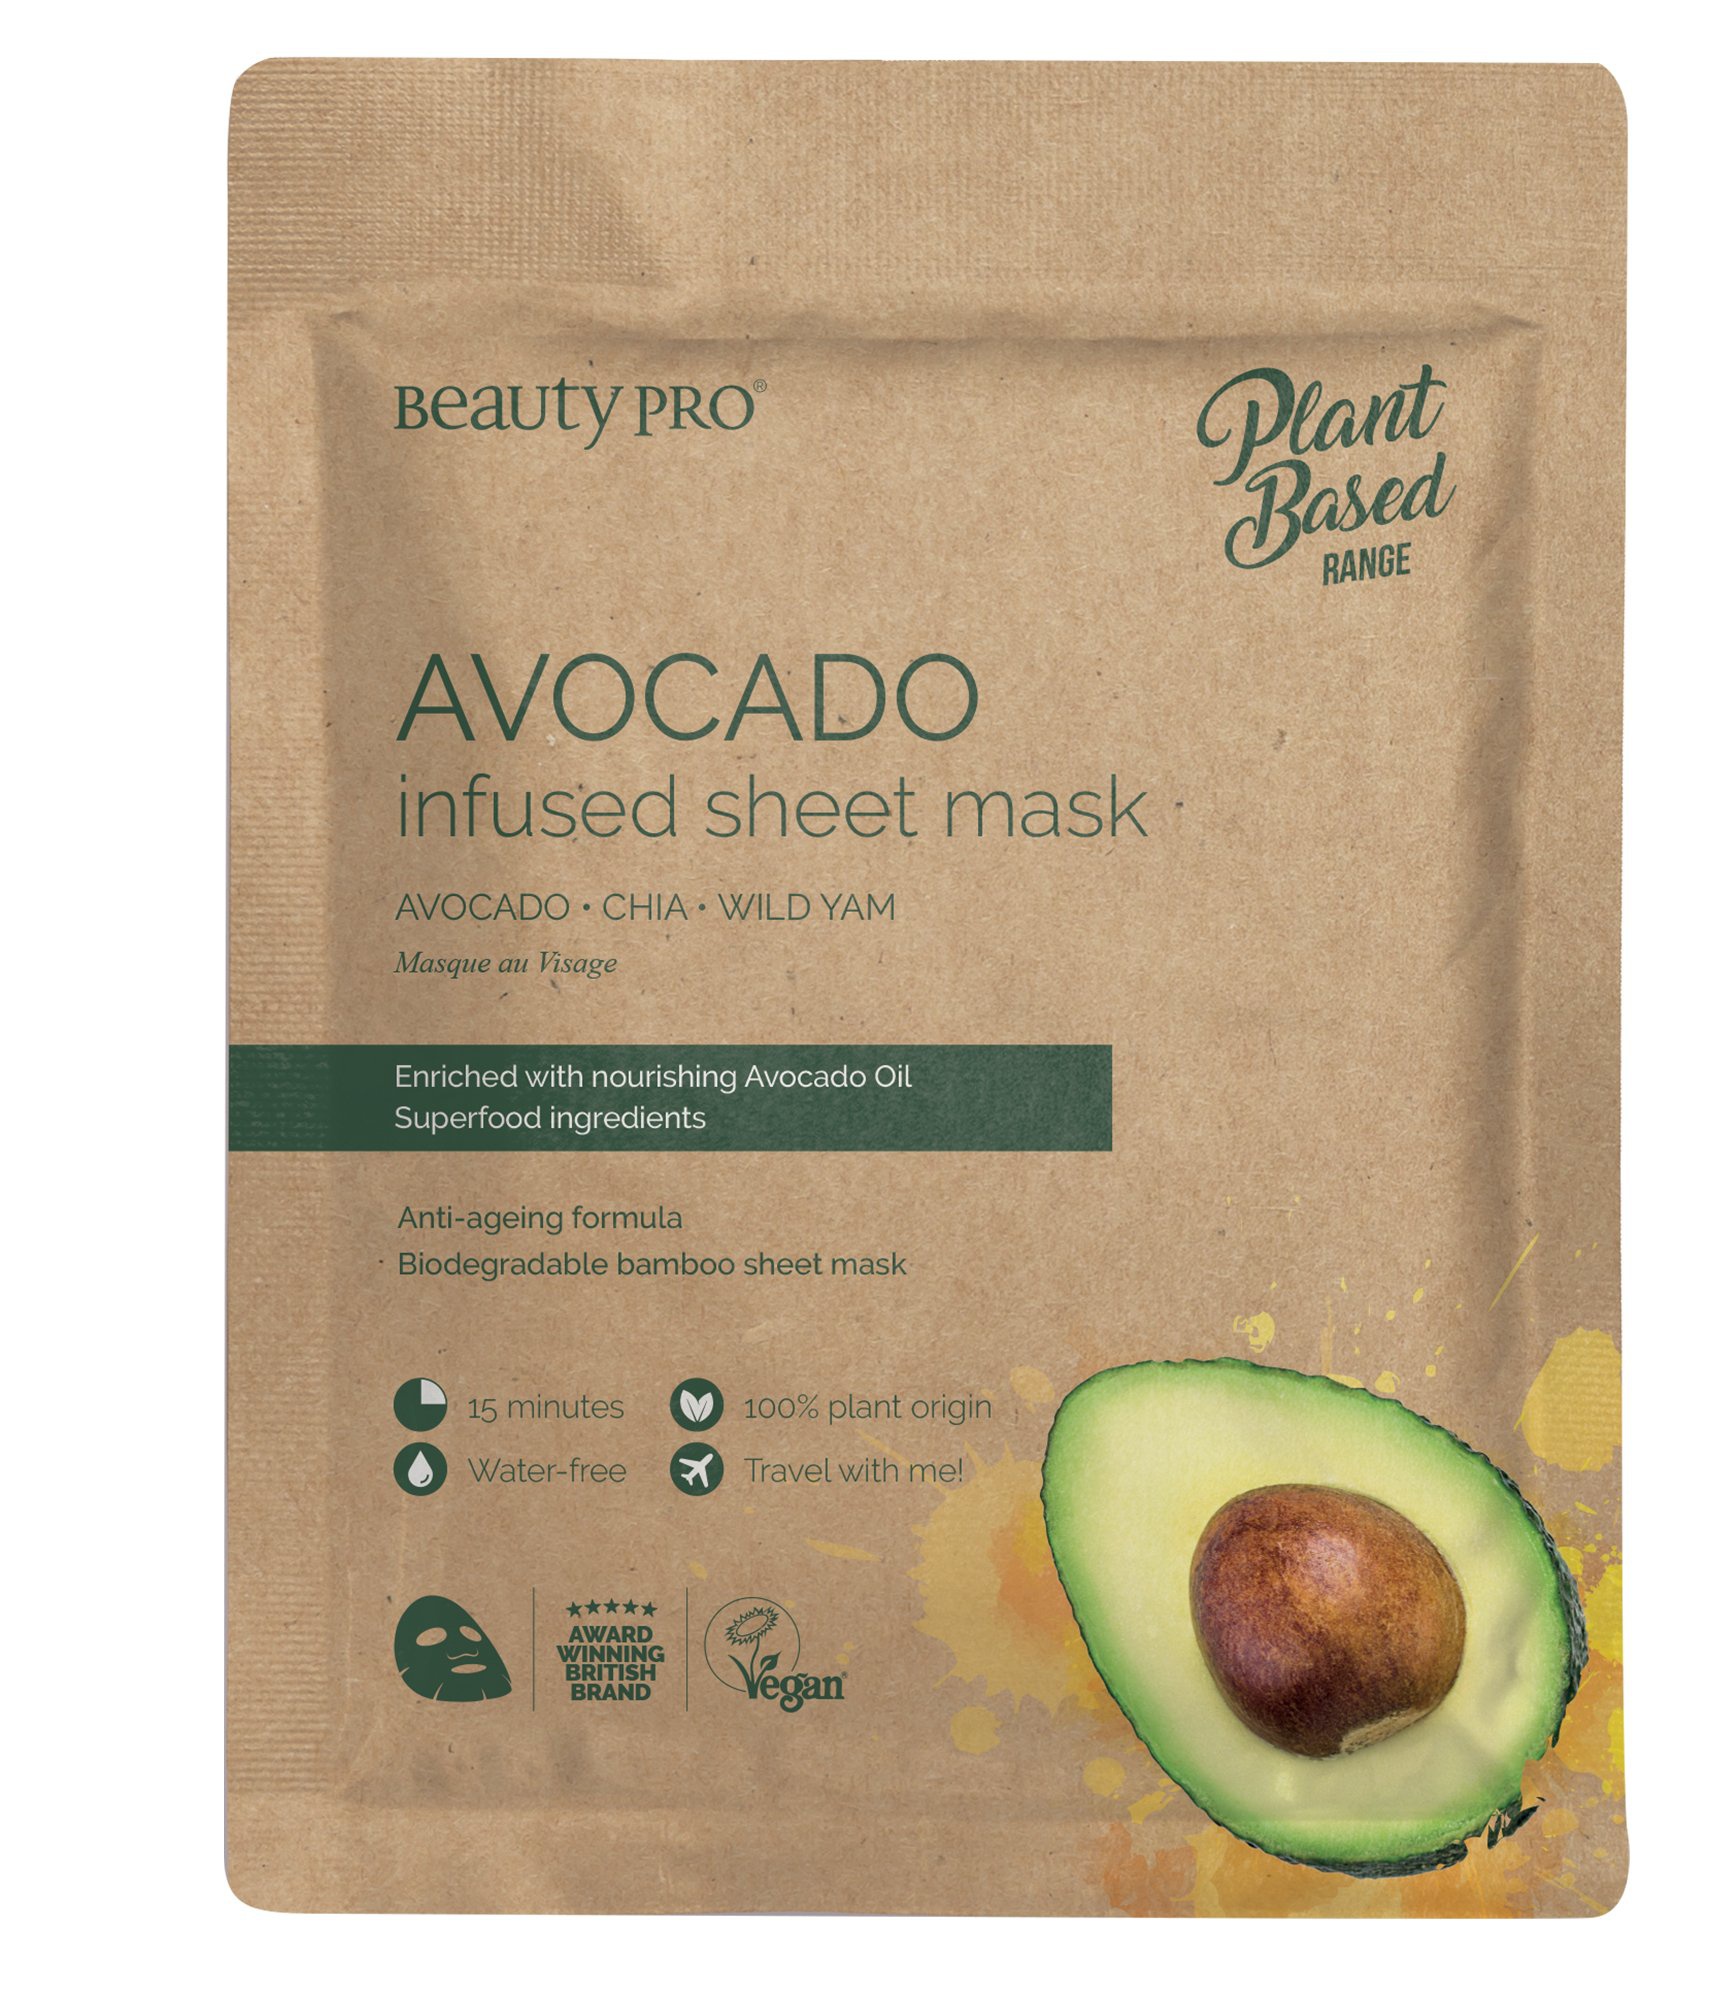 Beauty Pro Avocado Infused Sheet Mask